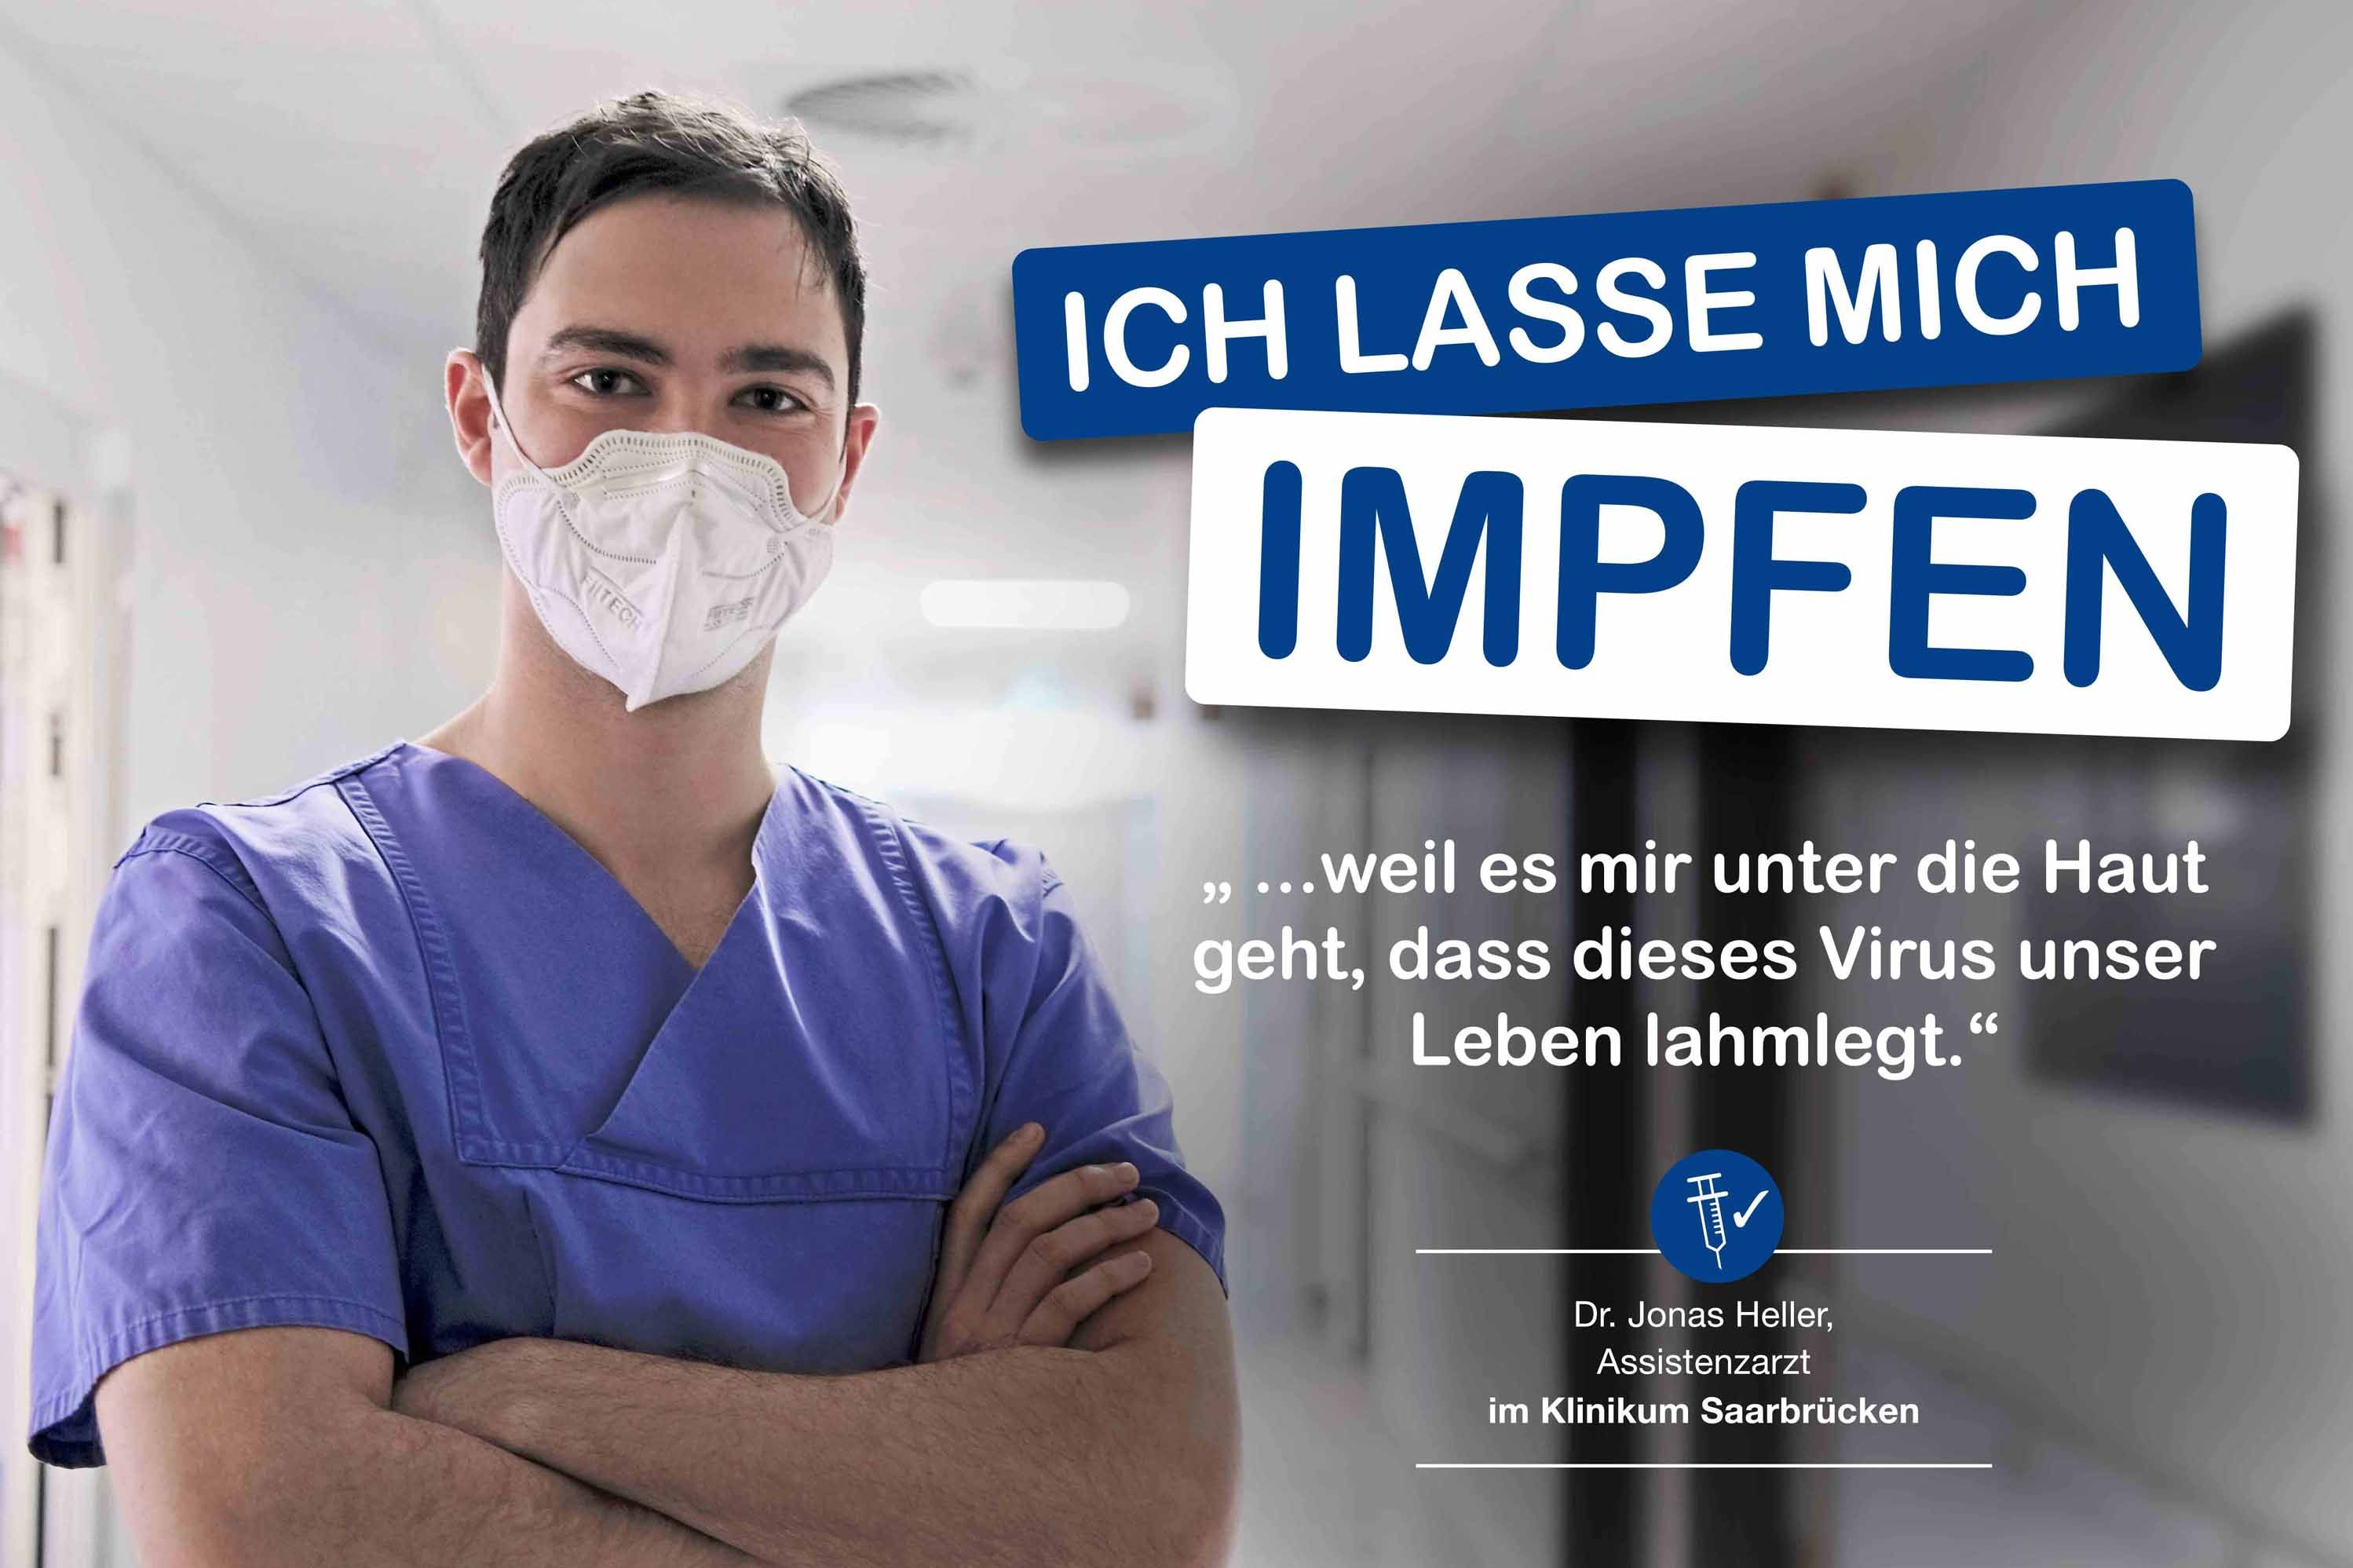 Impfkampagne Klinikum Saarbrücken: Dr. Jonas Heller, Assistenzarzt